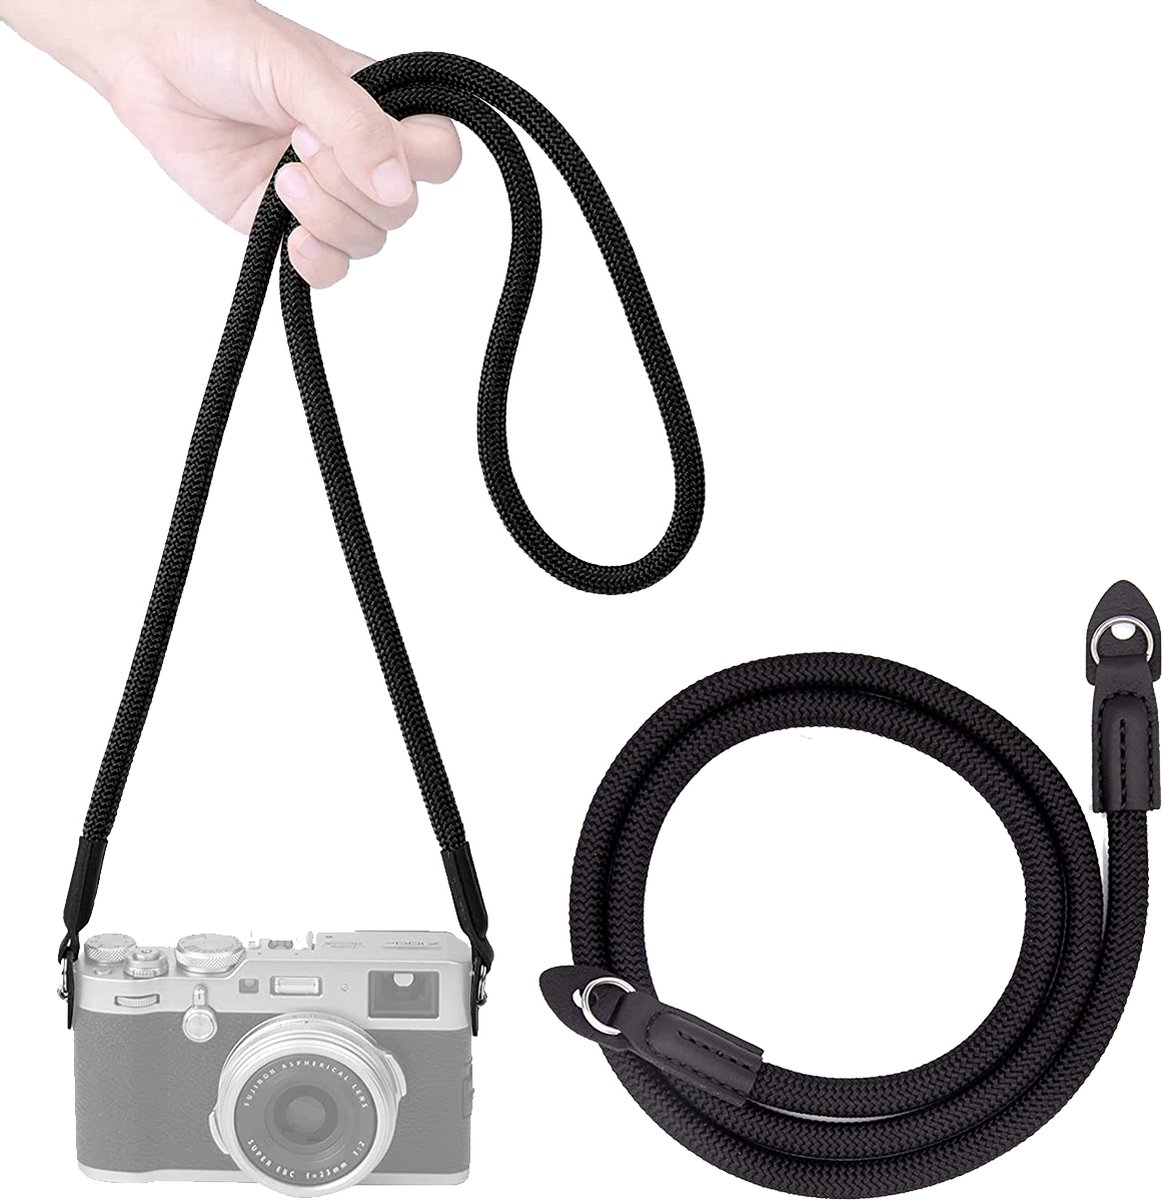 YONO Camera Riem Nylon voor Compact Camera en Systeemcamera - Vintage Schouder Strap geschikt voor Canon / Nikon / Sony / Panasonic - Zwart